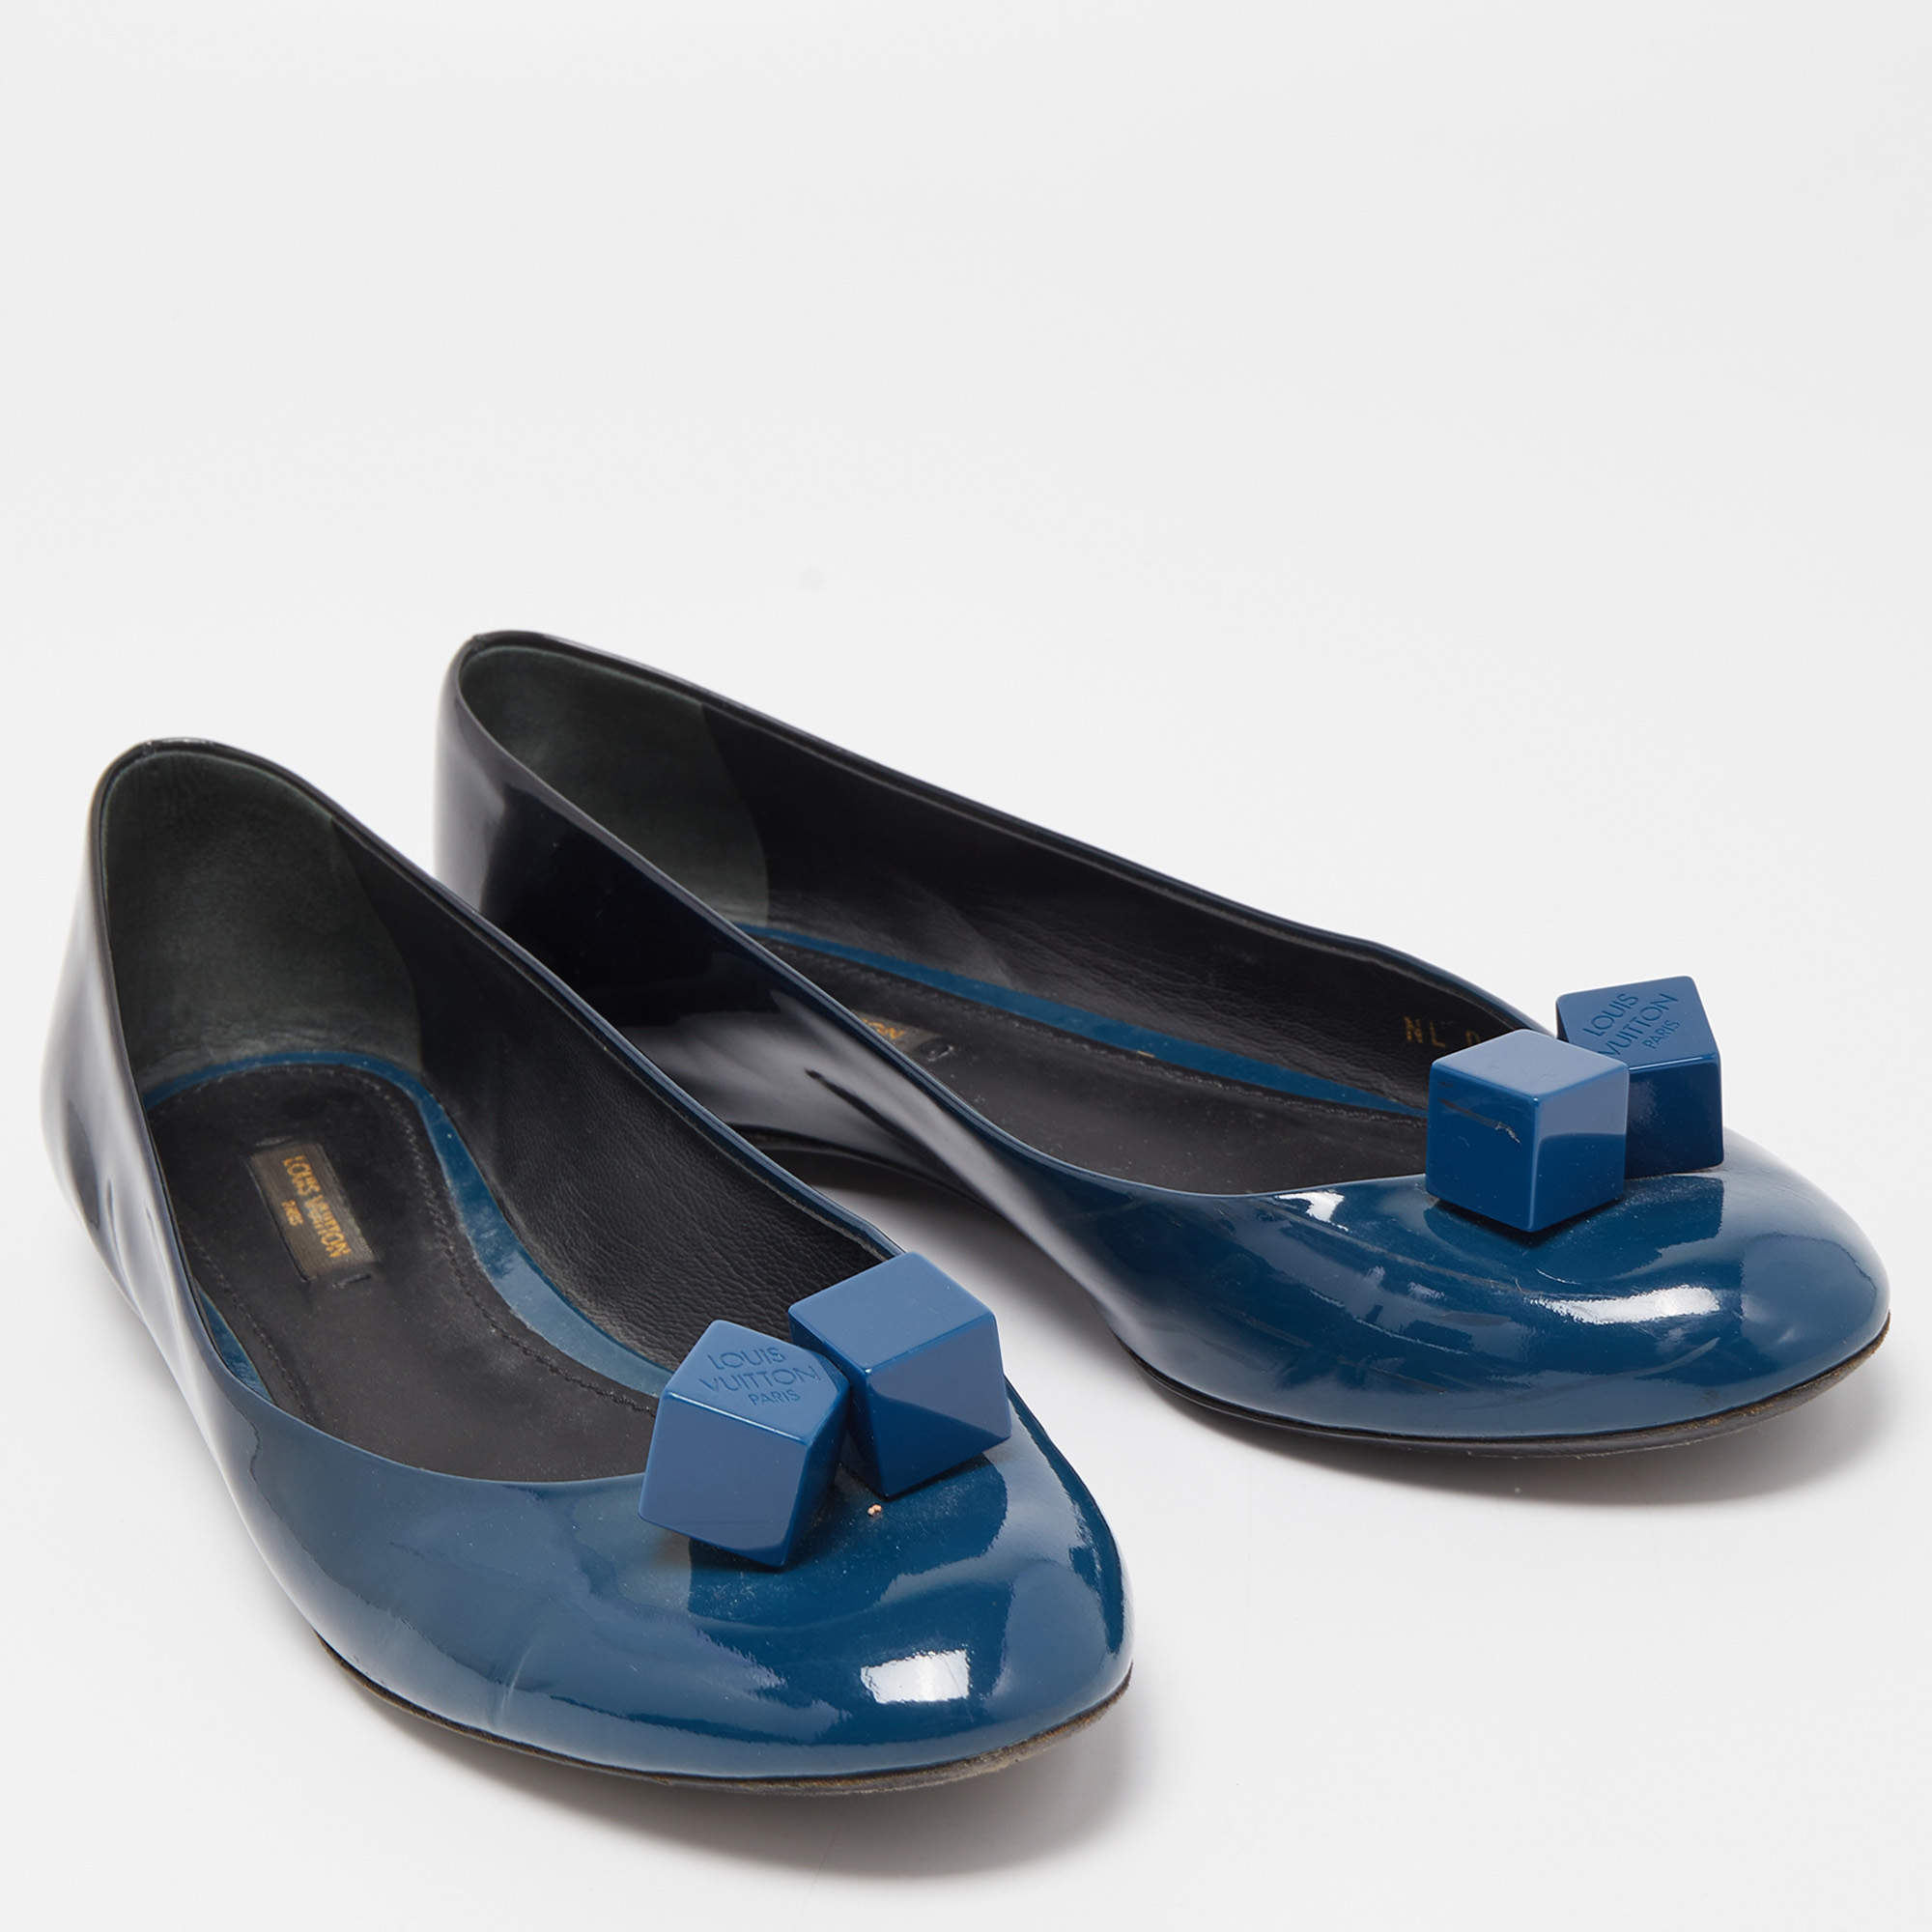 Louis Vuitton Ombre Patent Leather Flat Sandals